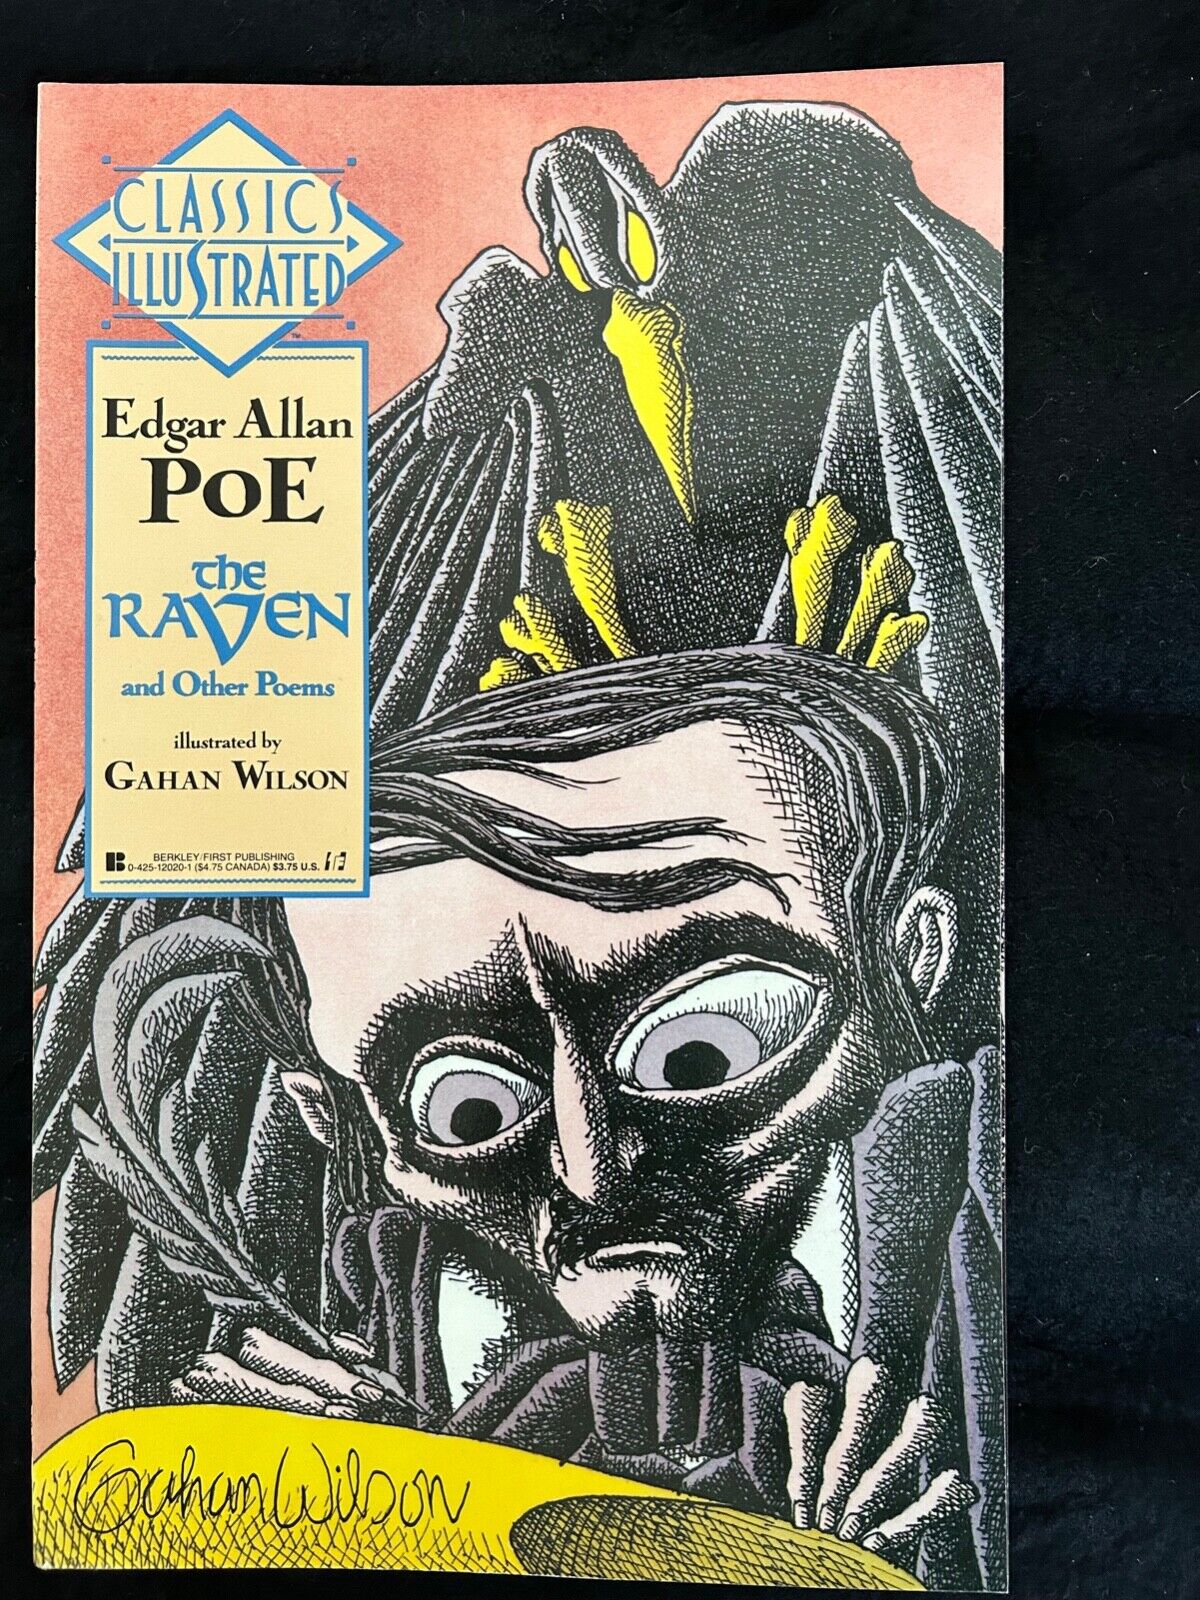 CLASSICS ILLUSTRATED #1 THE RAVEN. Edgar Allan Poe Gahan Wilson 9 stories